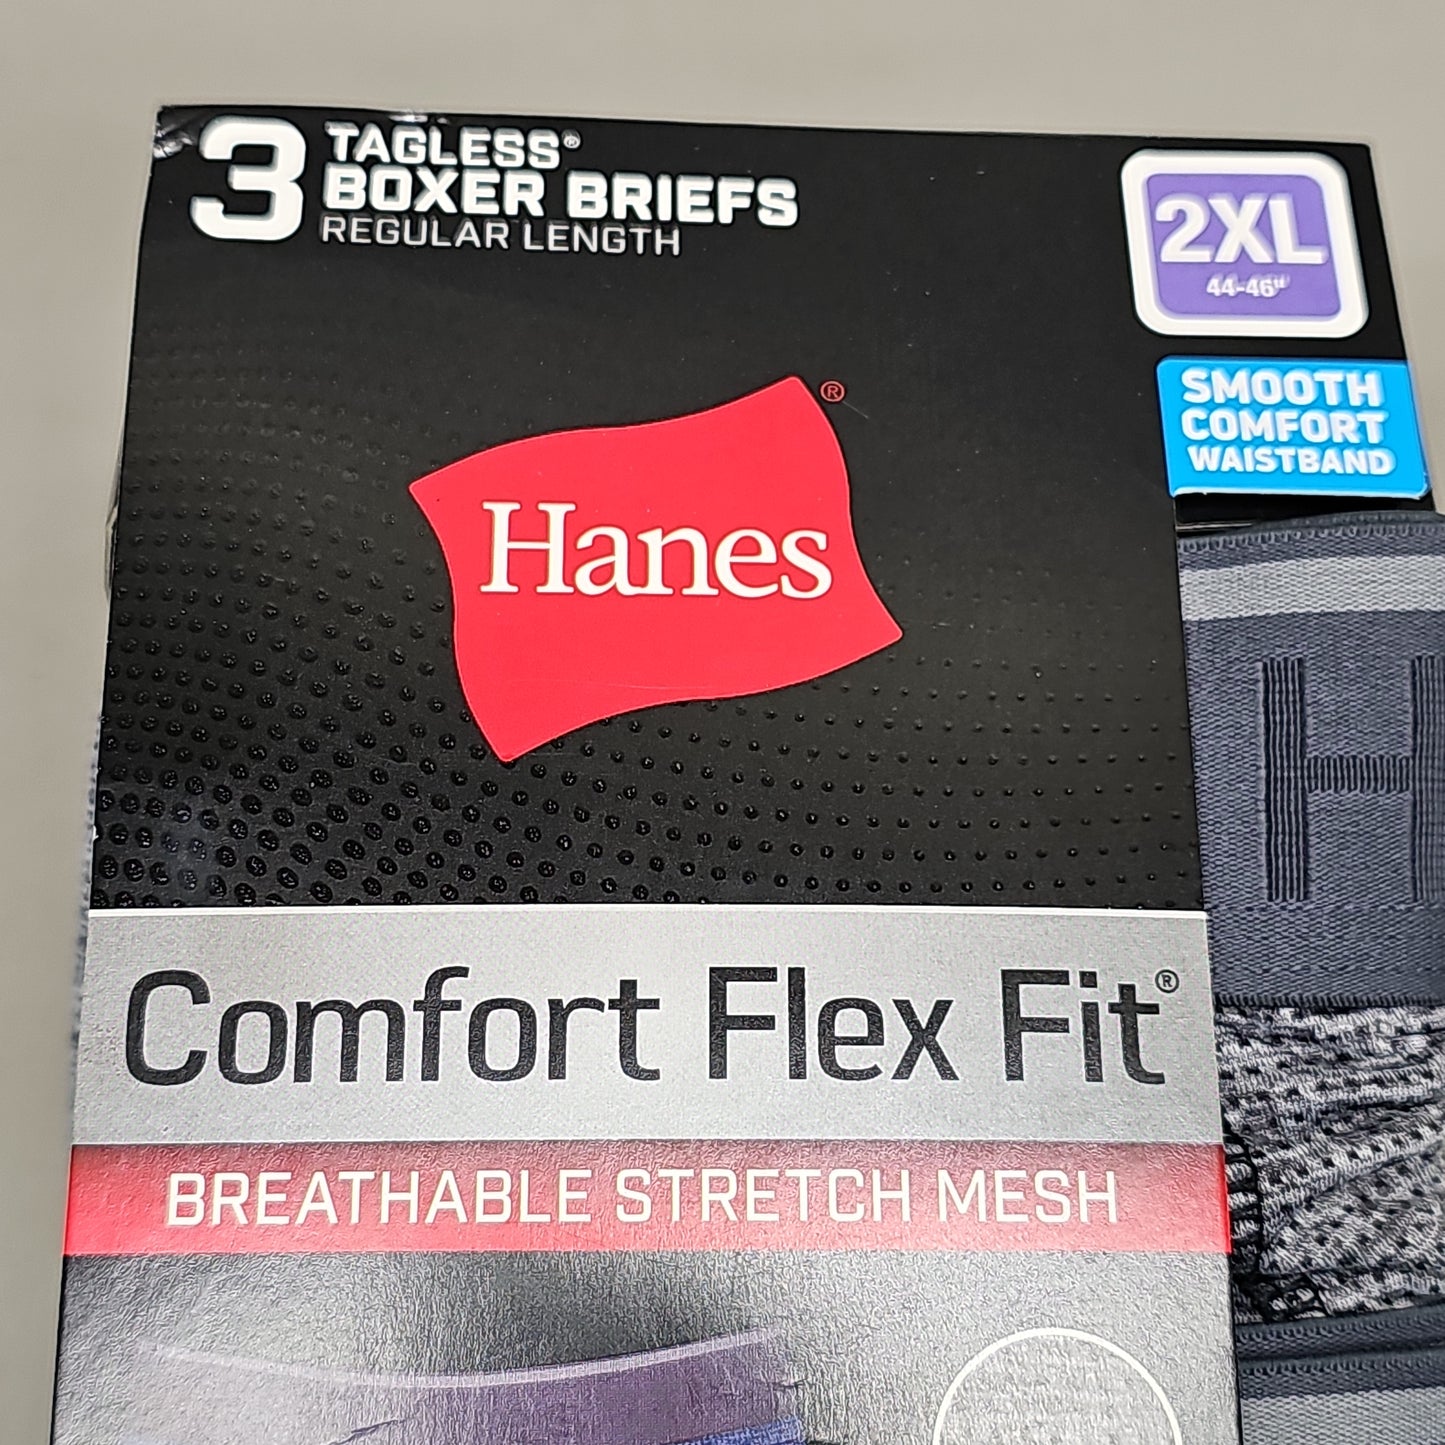 HANES Tagless Boxer Briefs Men's Size 2XL 44-46" 3-Pk Comfort Flex Fit Stretch Mesh CFFMA3 (New)